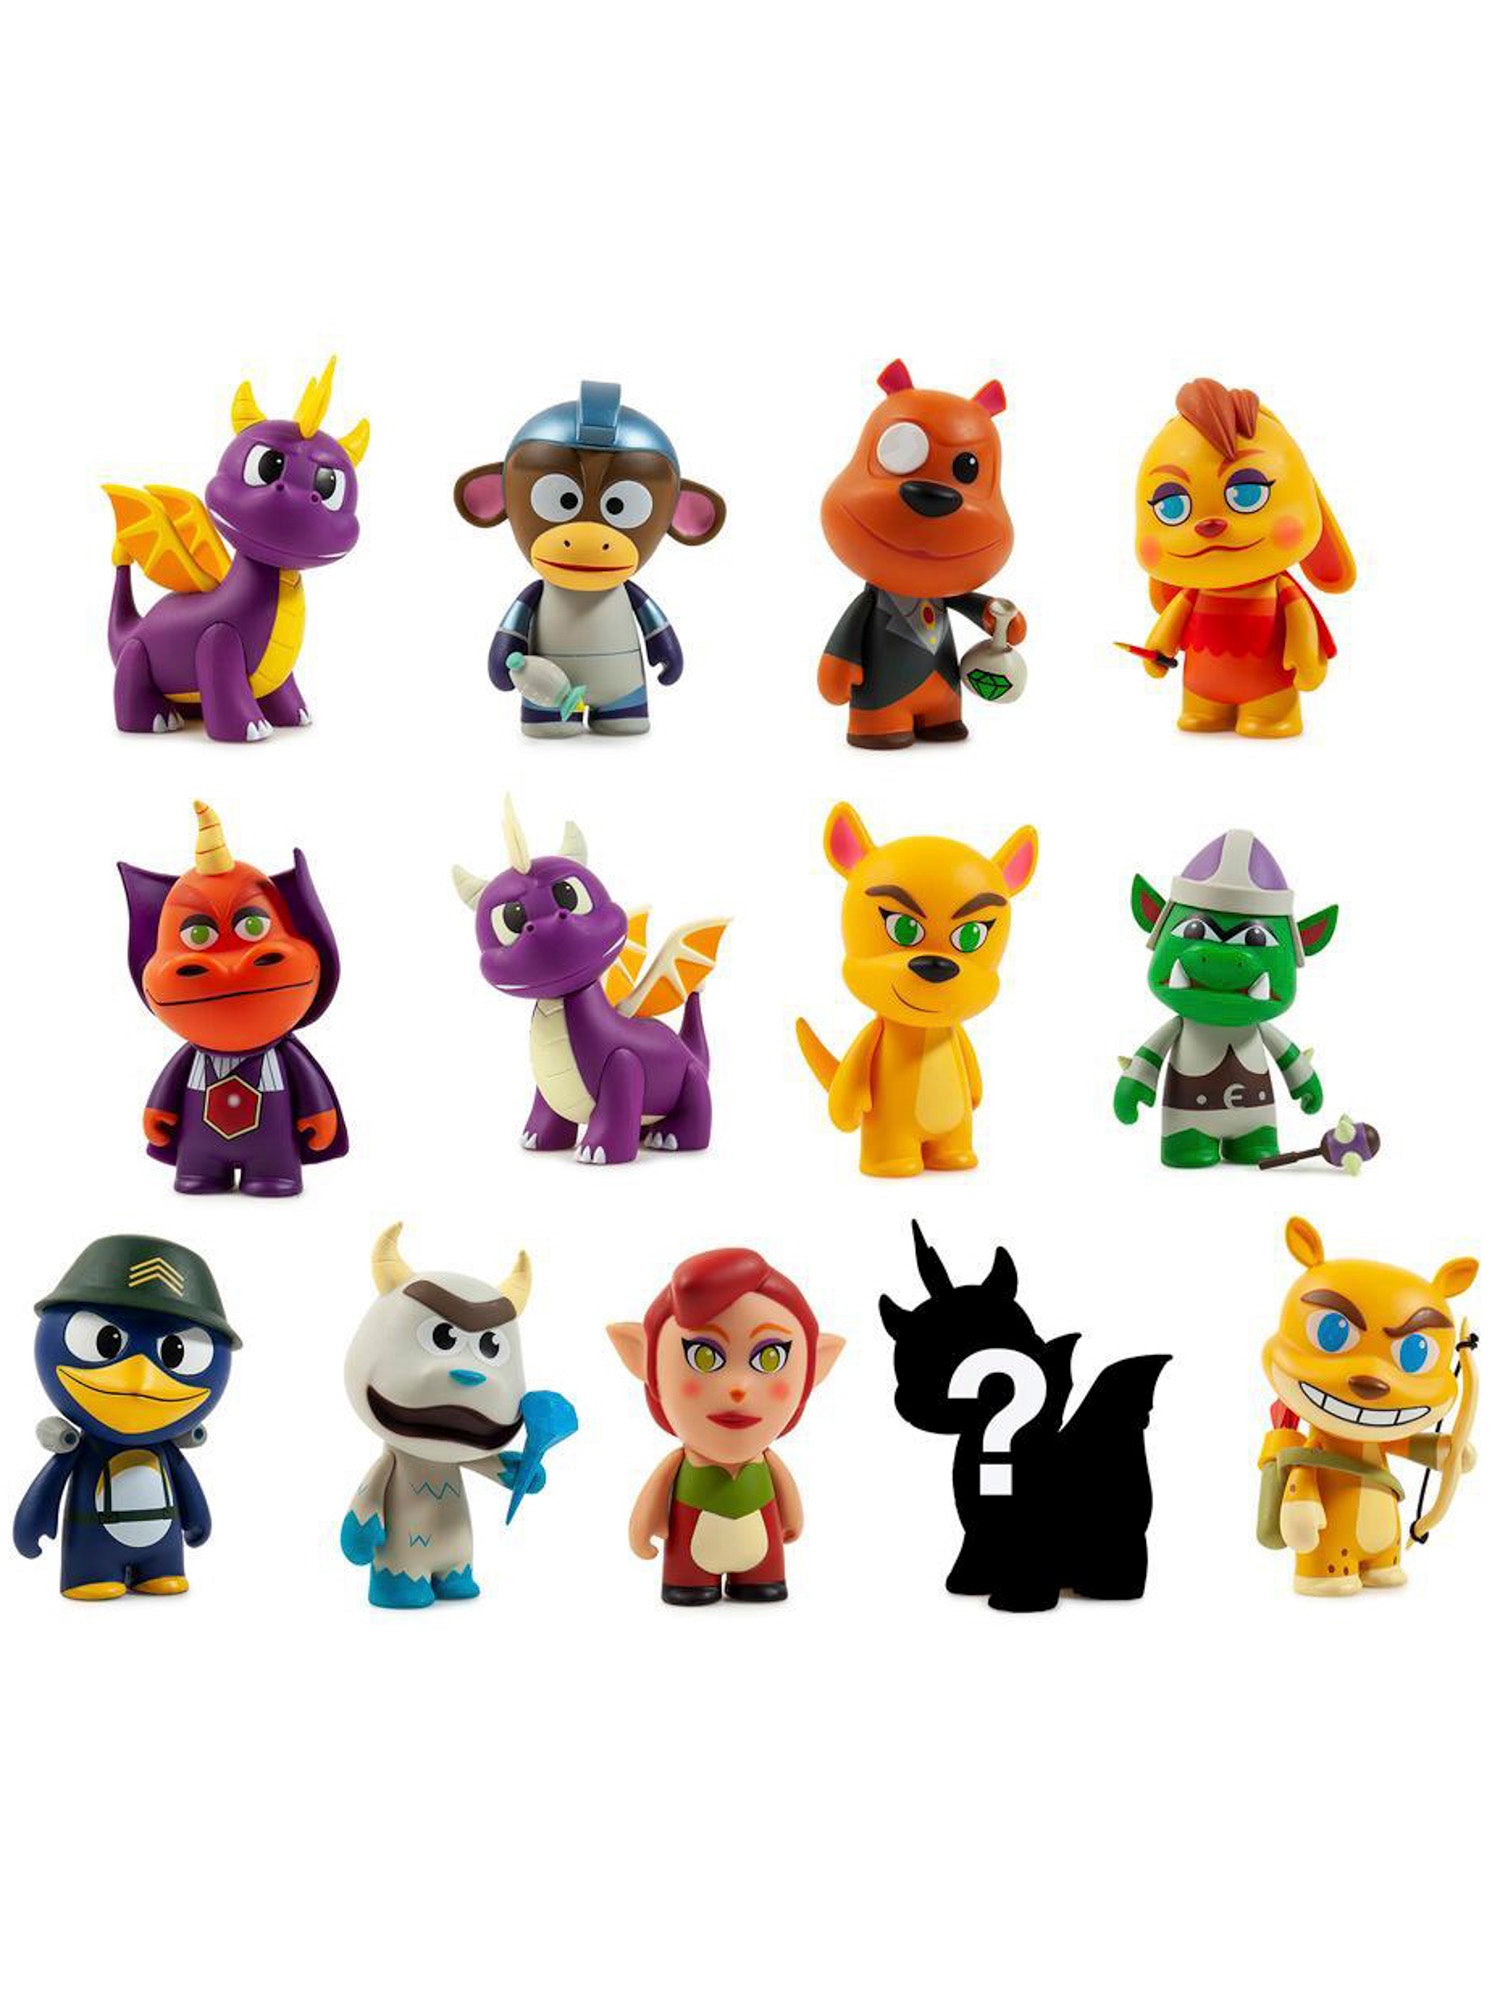 Kidrobot - Spyro the Dragon Vinyl Figure Series - costumes.com